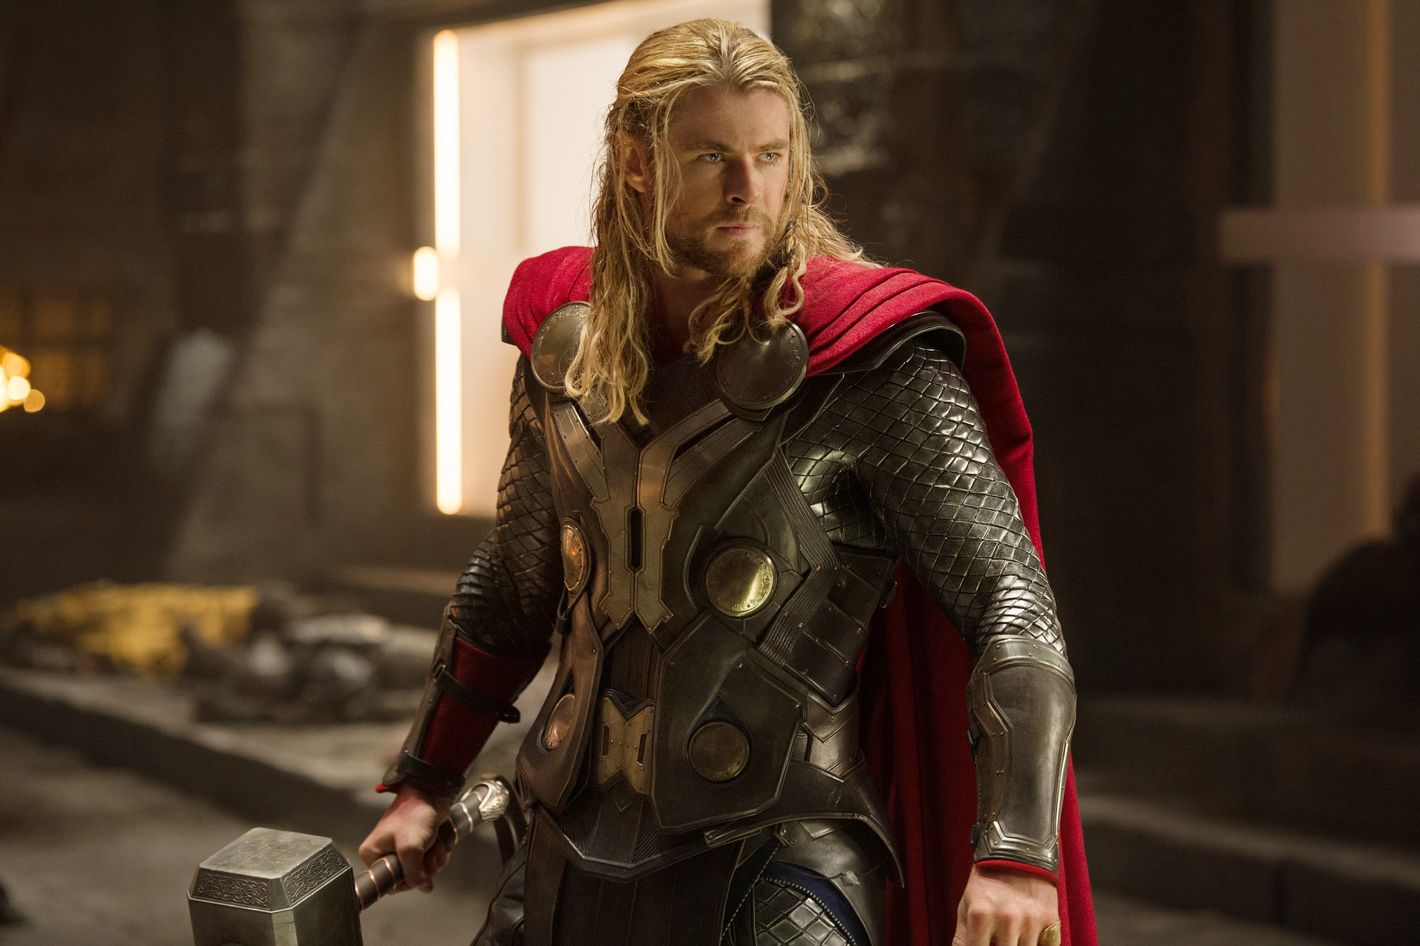 Thor: Ragnarok Has the Potential to Break the Marvel Mold